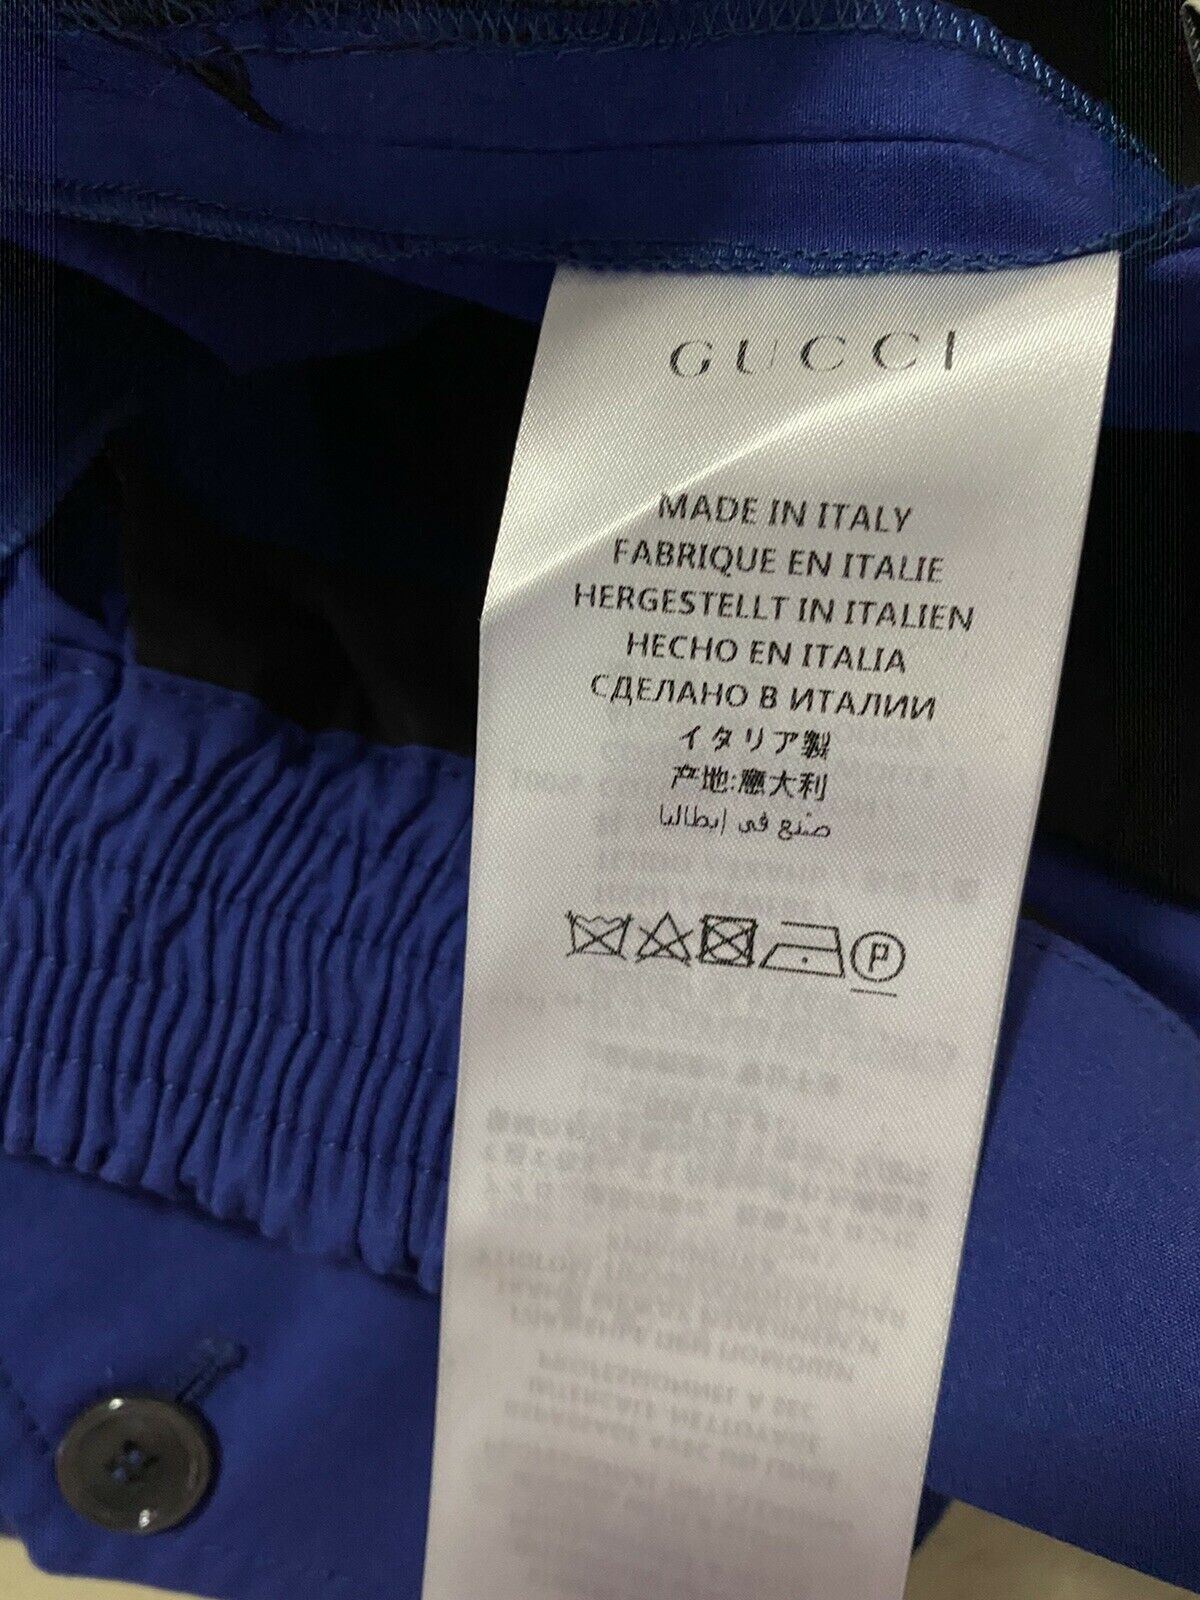 Neu mit Etikett: 880 $ Gucci kurze Herrenhose, Blau, Größe 32 US (48 Eu), Italien